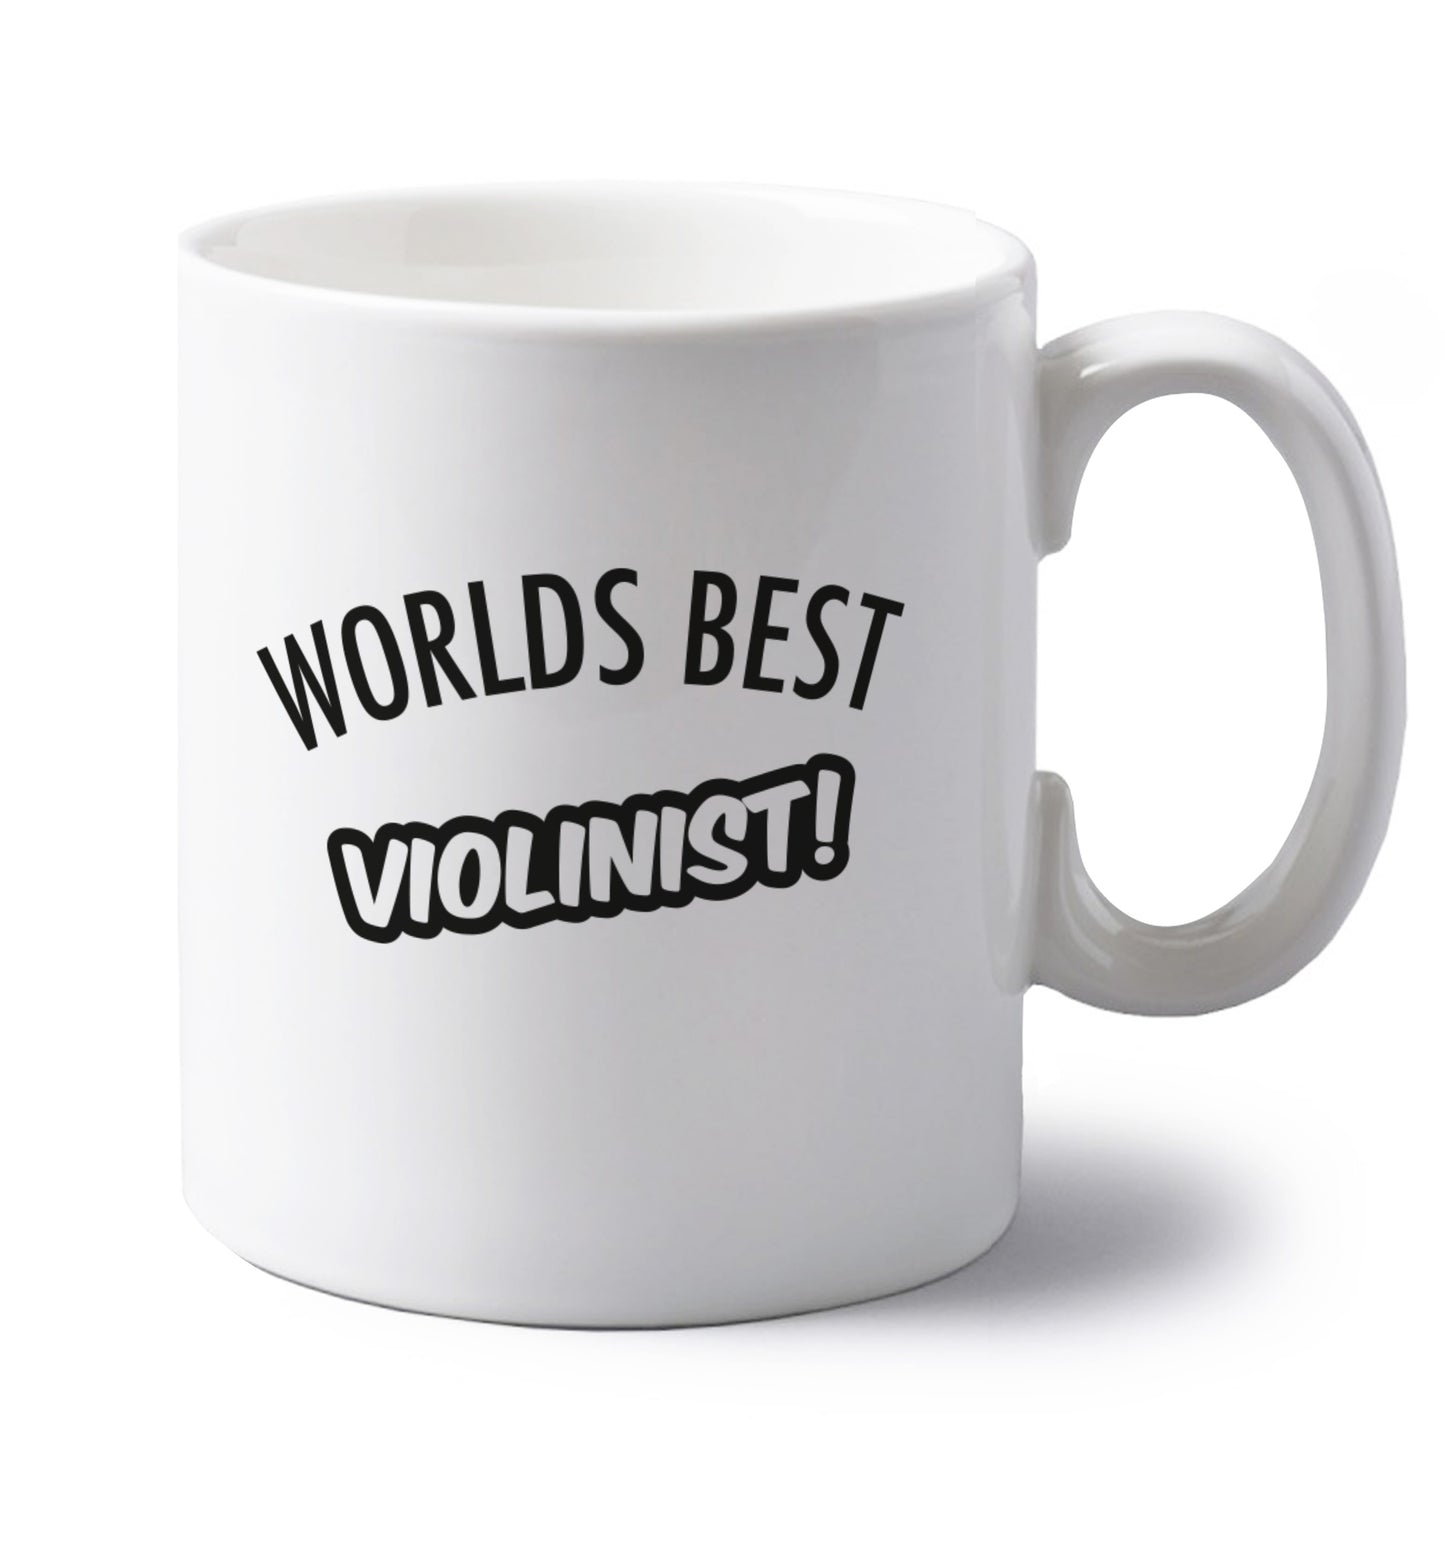 Worlds best violinist left handed white ceramic mug 